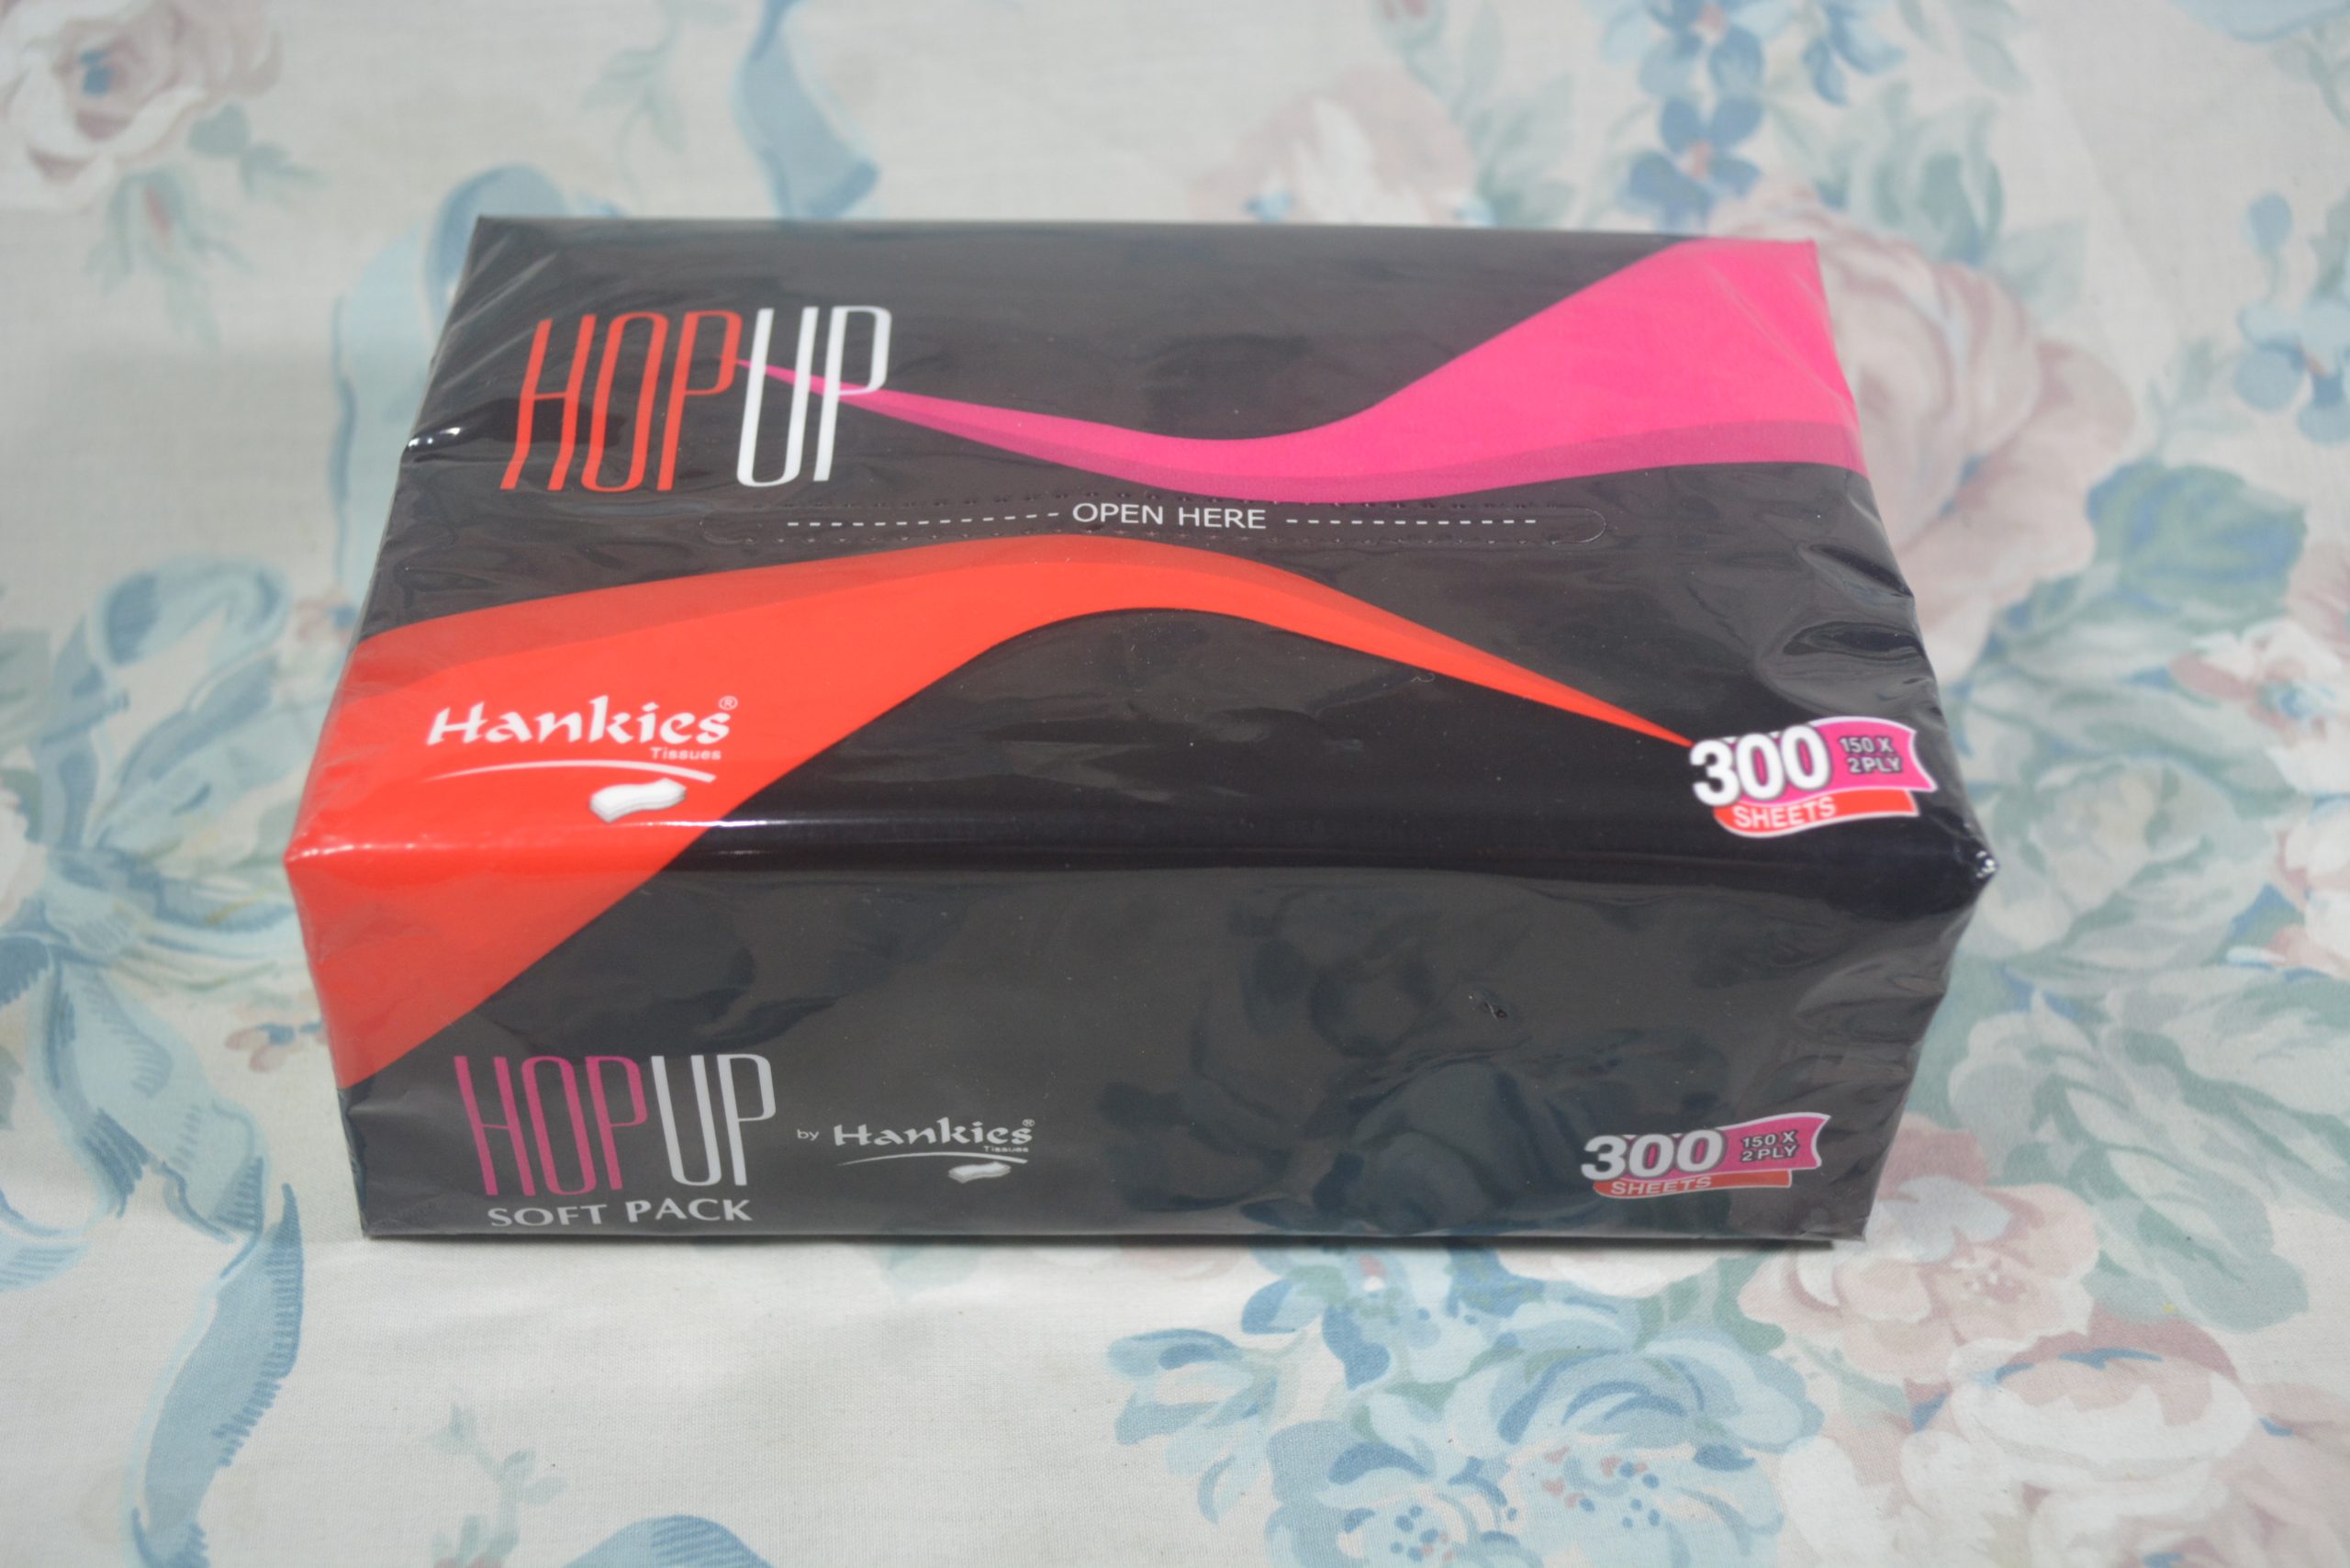 5. Hop up Soft tissue box (4)